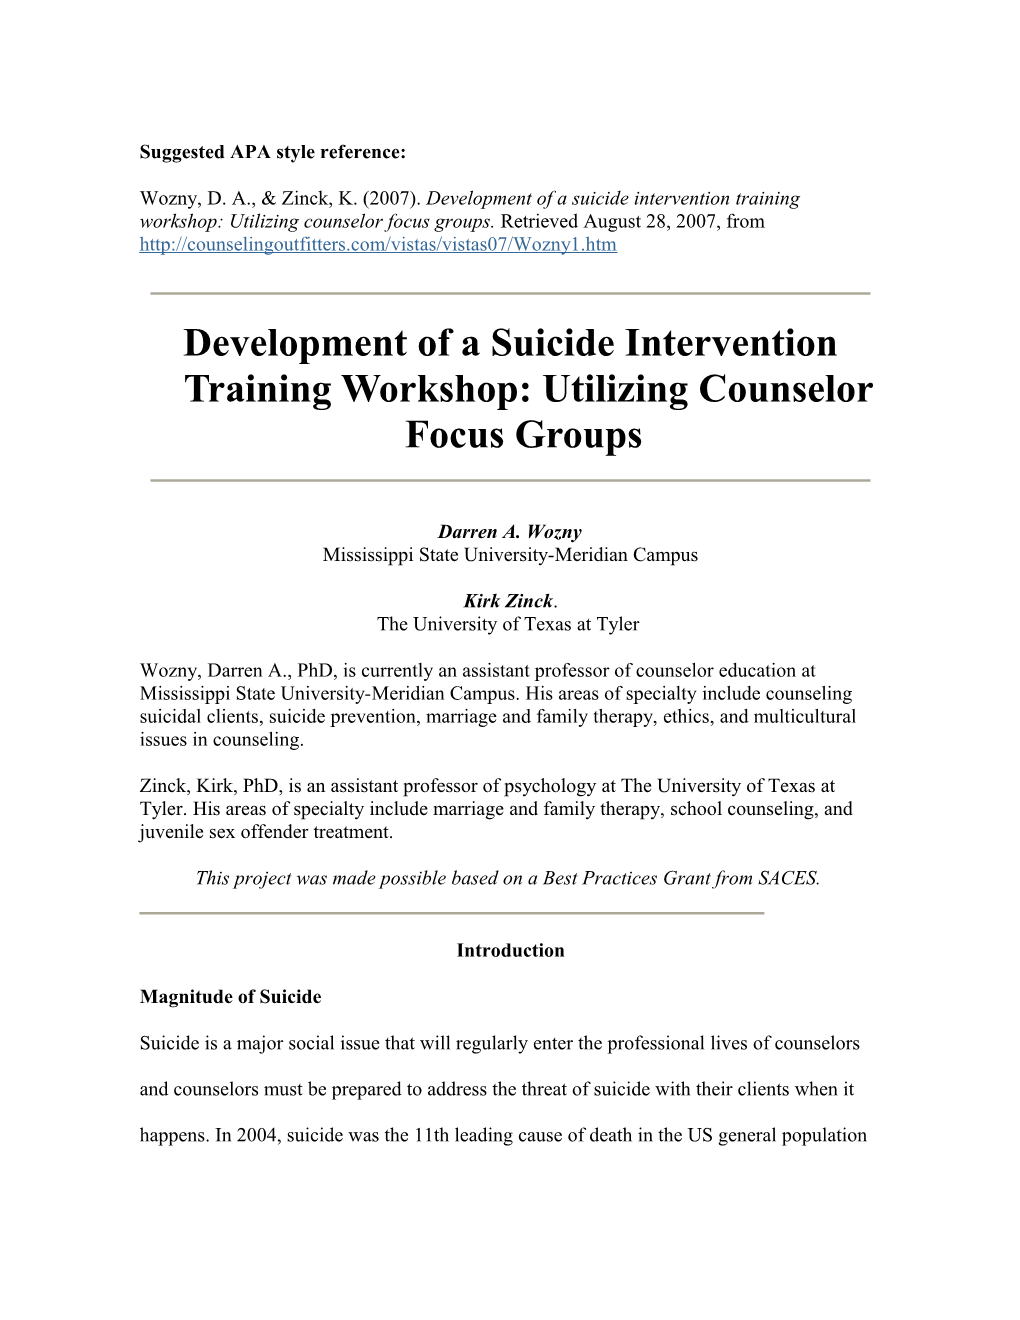 Development of a Suicide Intervention Training Workshop: Utilizing Counselor Focus Groups